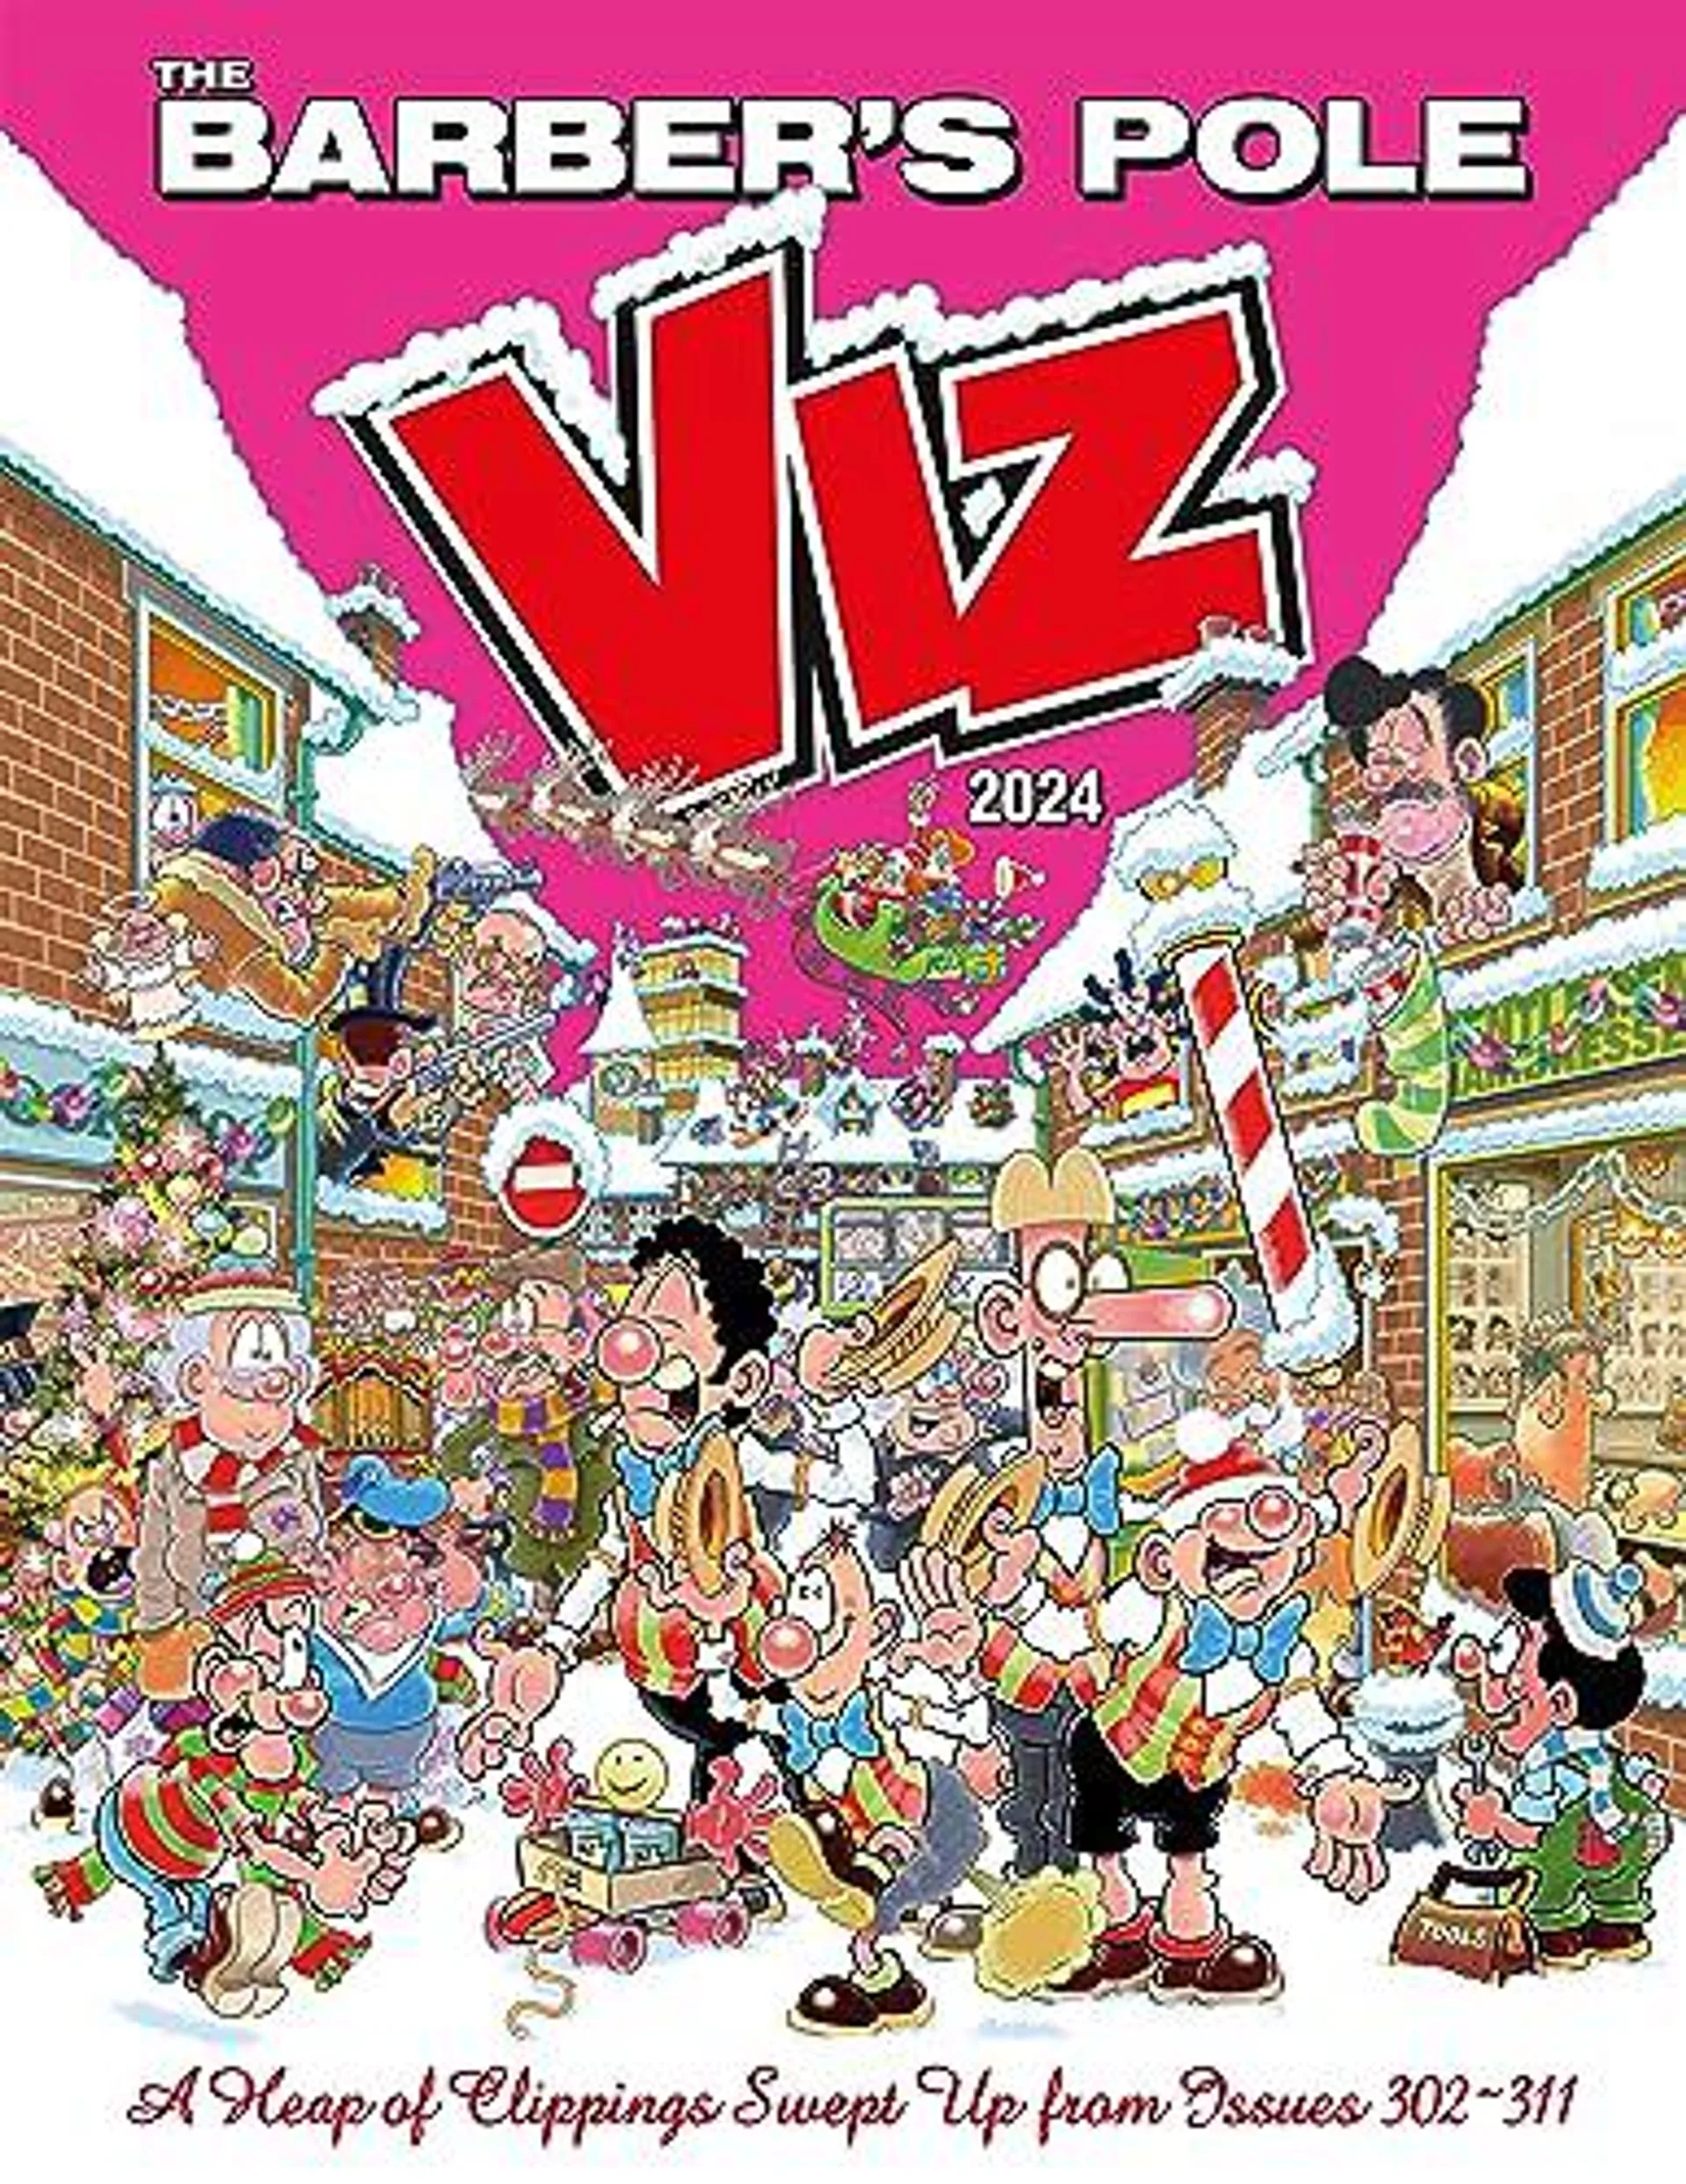 Viz Annual 2024: The Barber's Pole by Viz Magazine